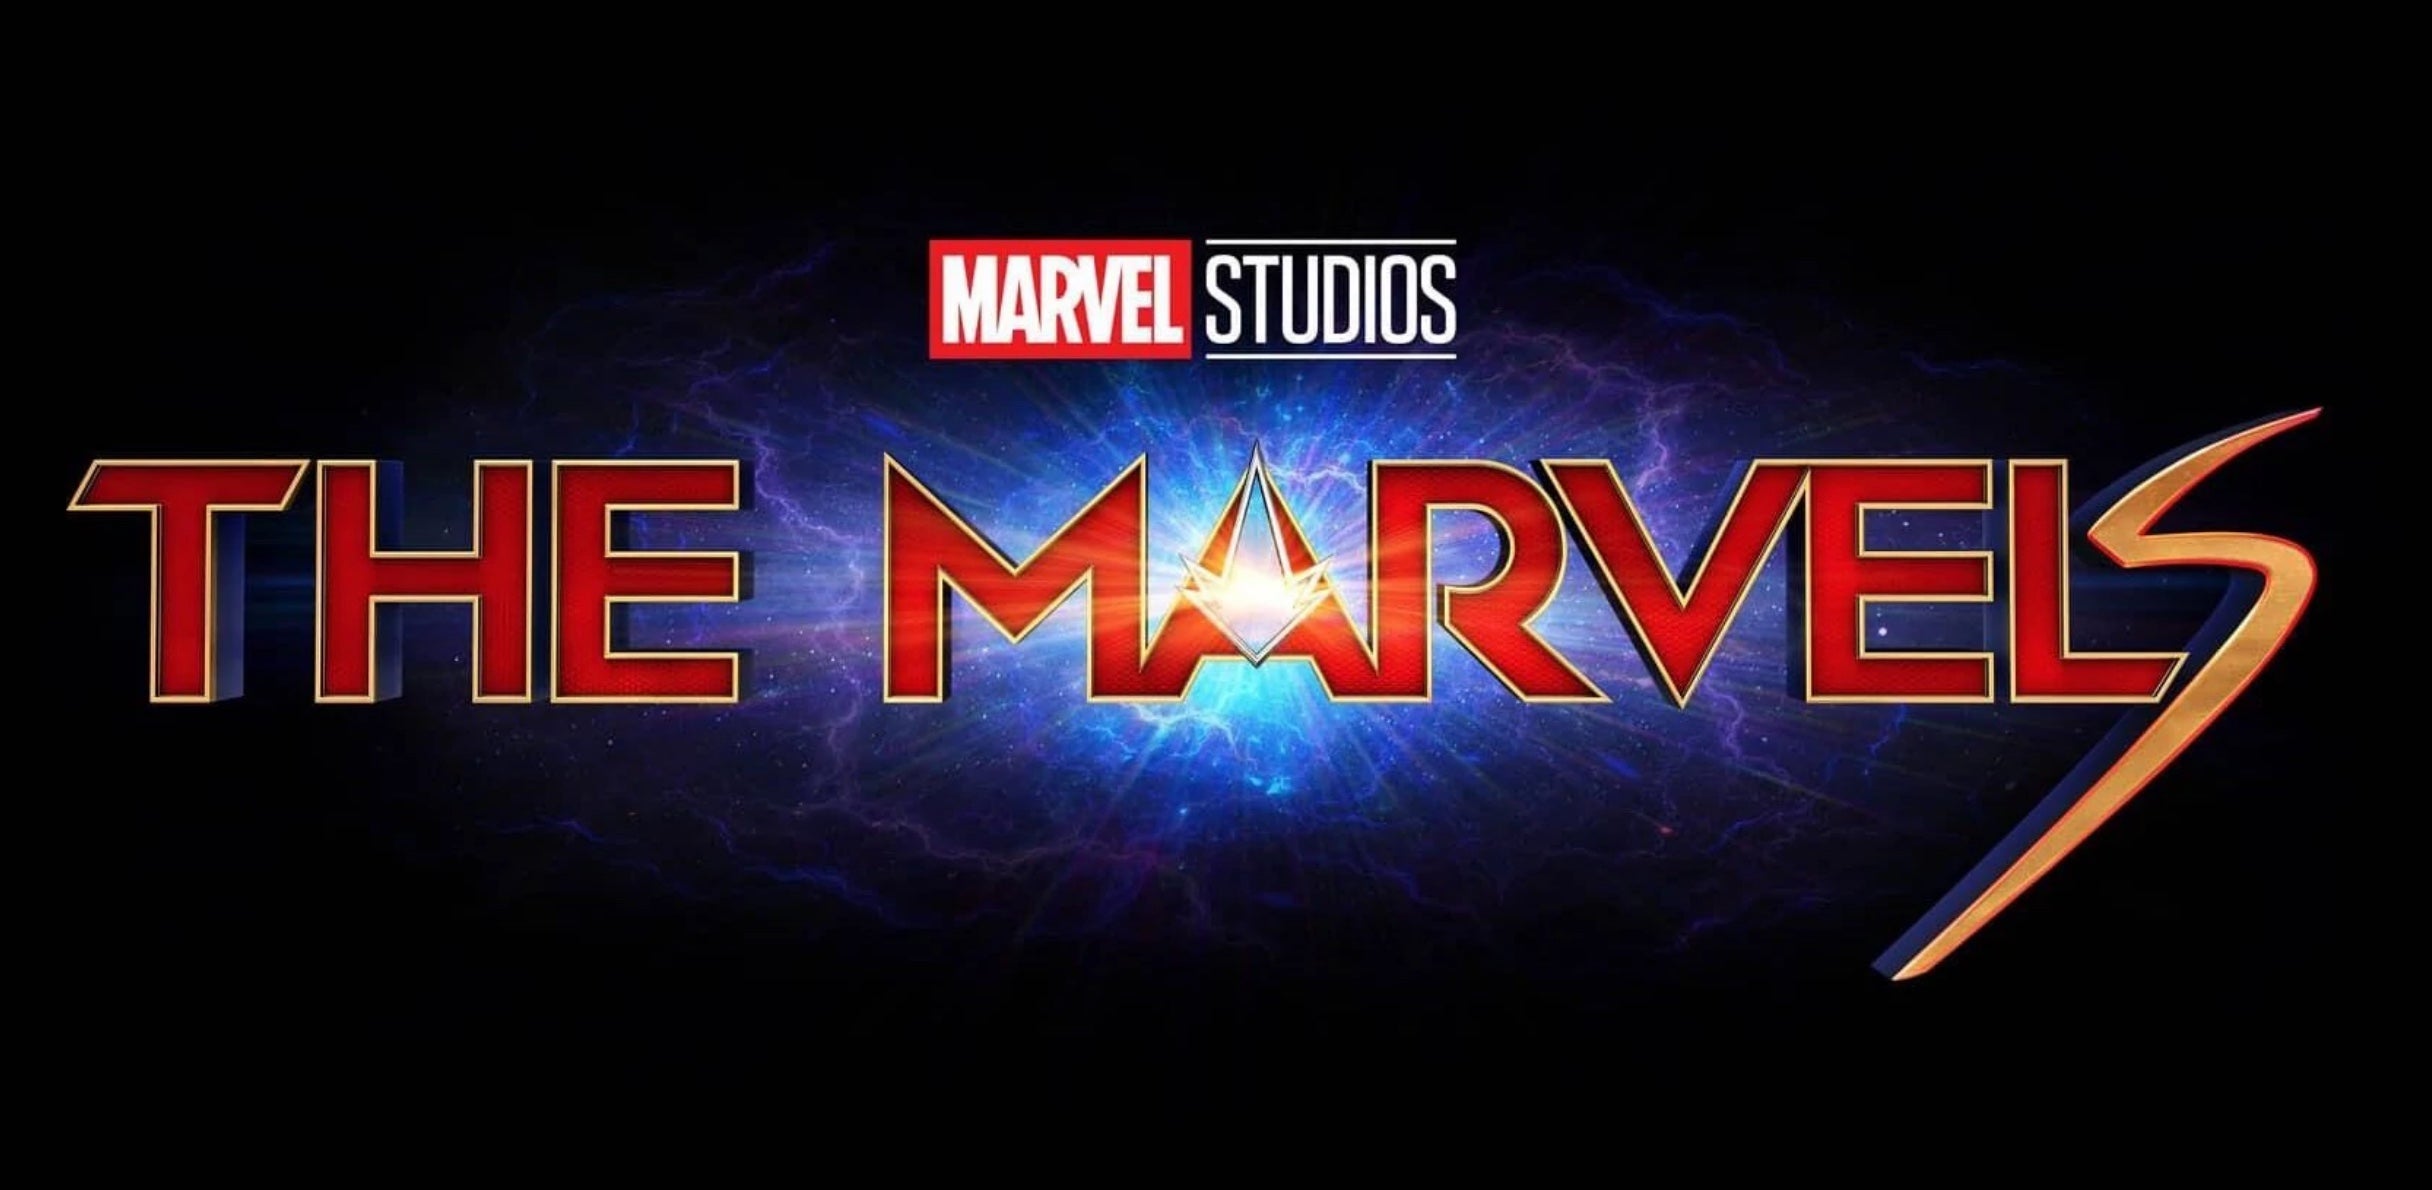 Image: Marvel Studios